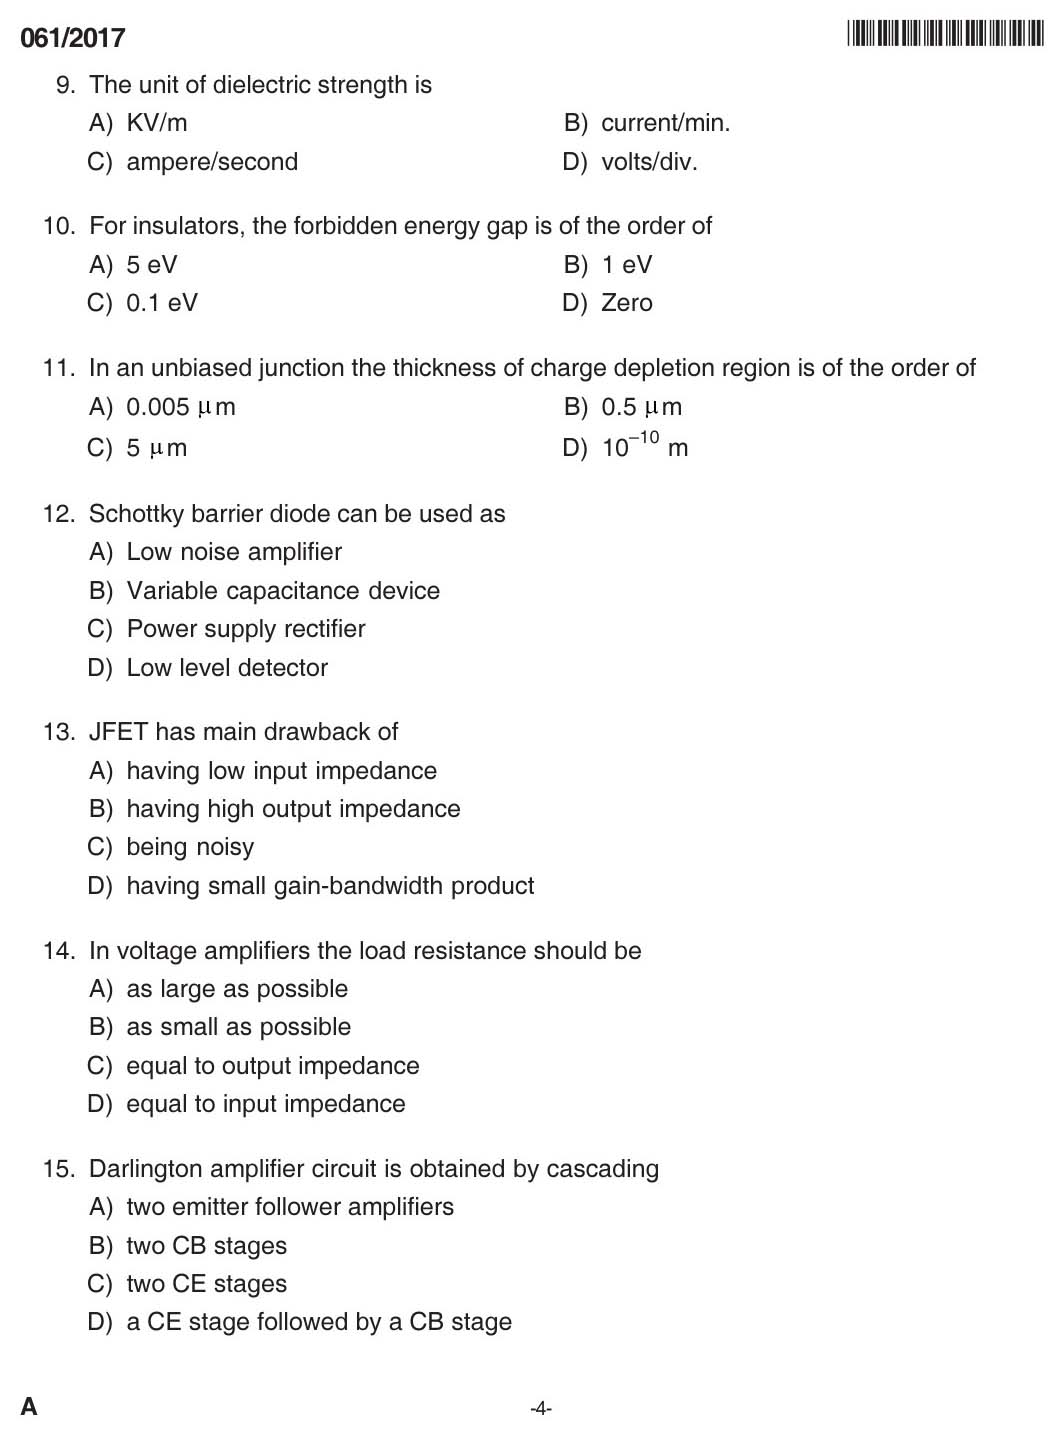 Kerala PSC Tradesman Exam Question Code 0612017 3